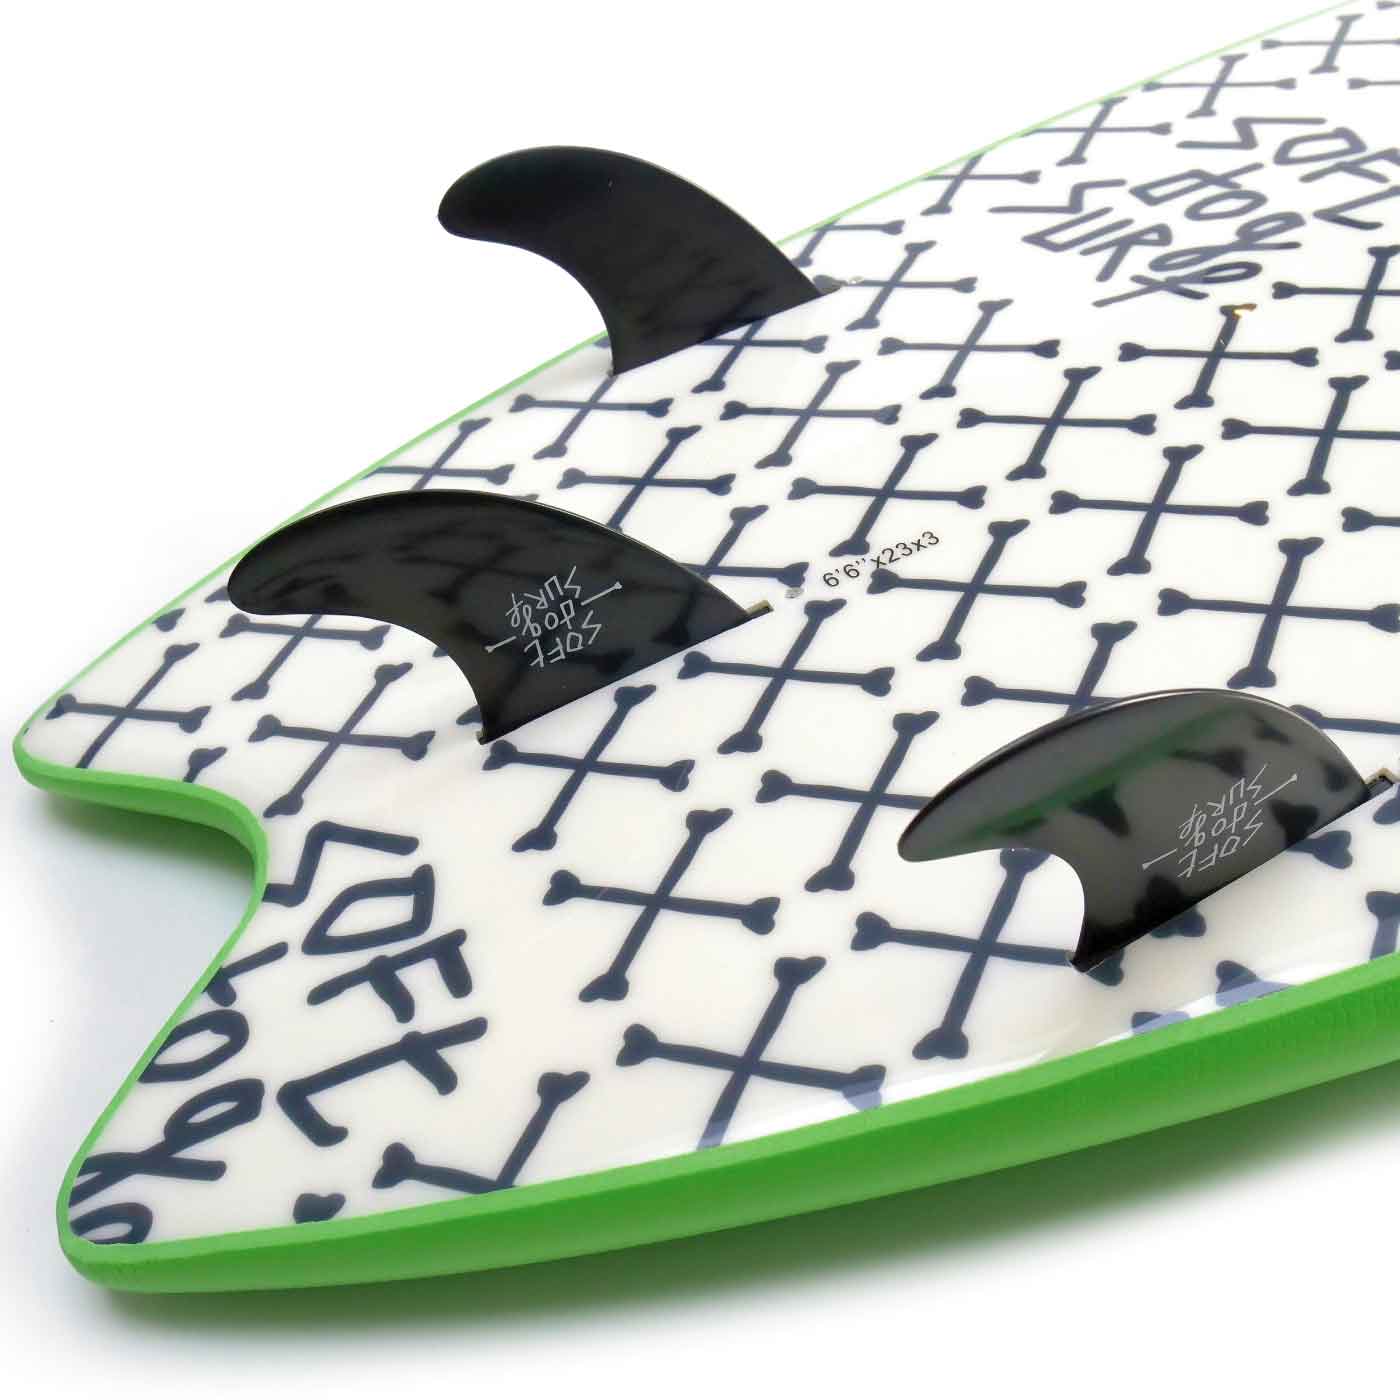 softdogsurf boxer 6'6 soft top surfboard futures fins